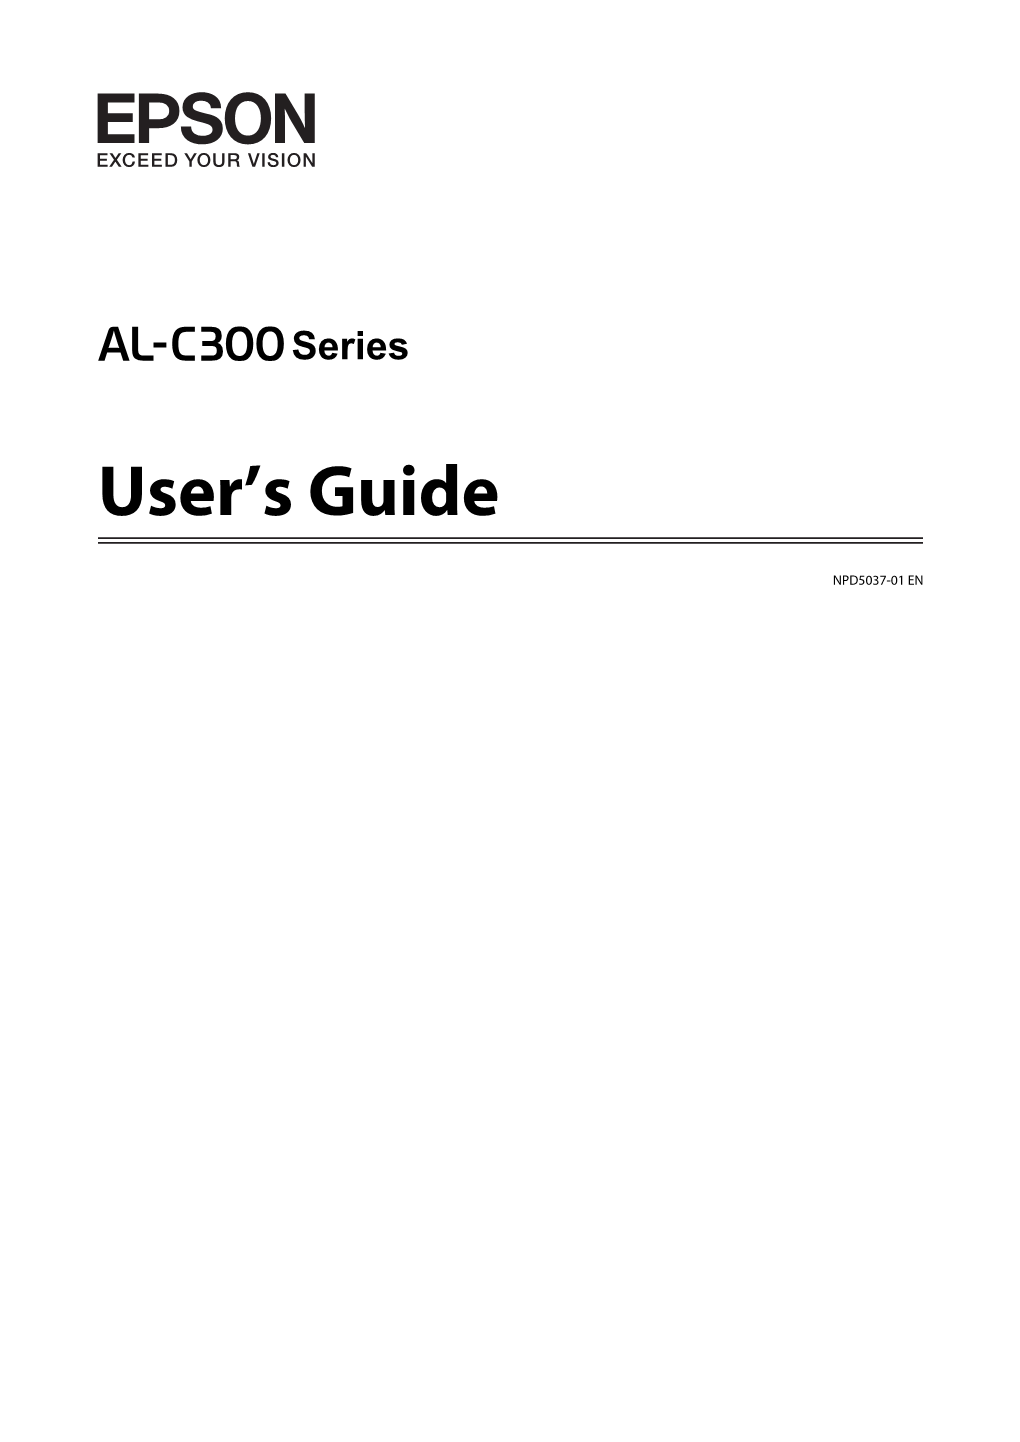 AL-C300 Series User's Guide